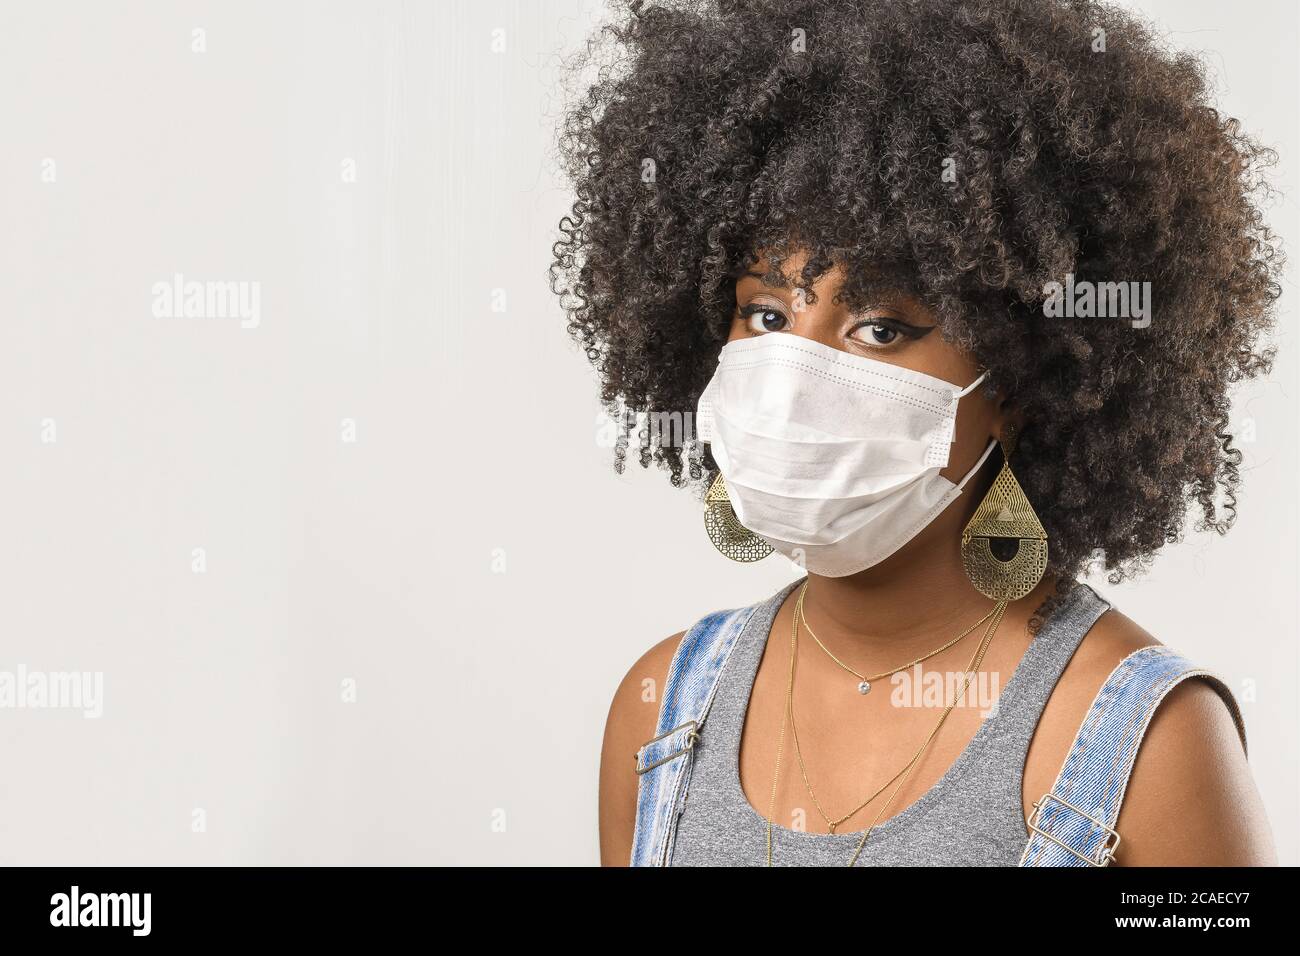 young girl wearing protective mask in corona virus pandemic, covid-19 Stock Photo